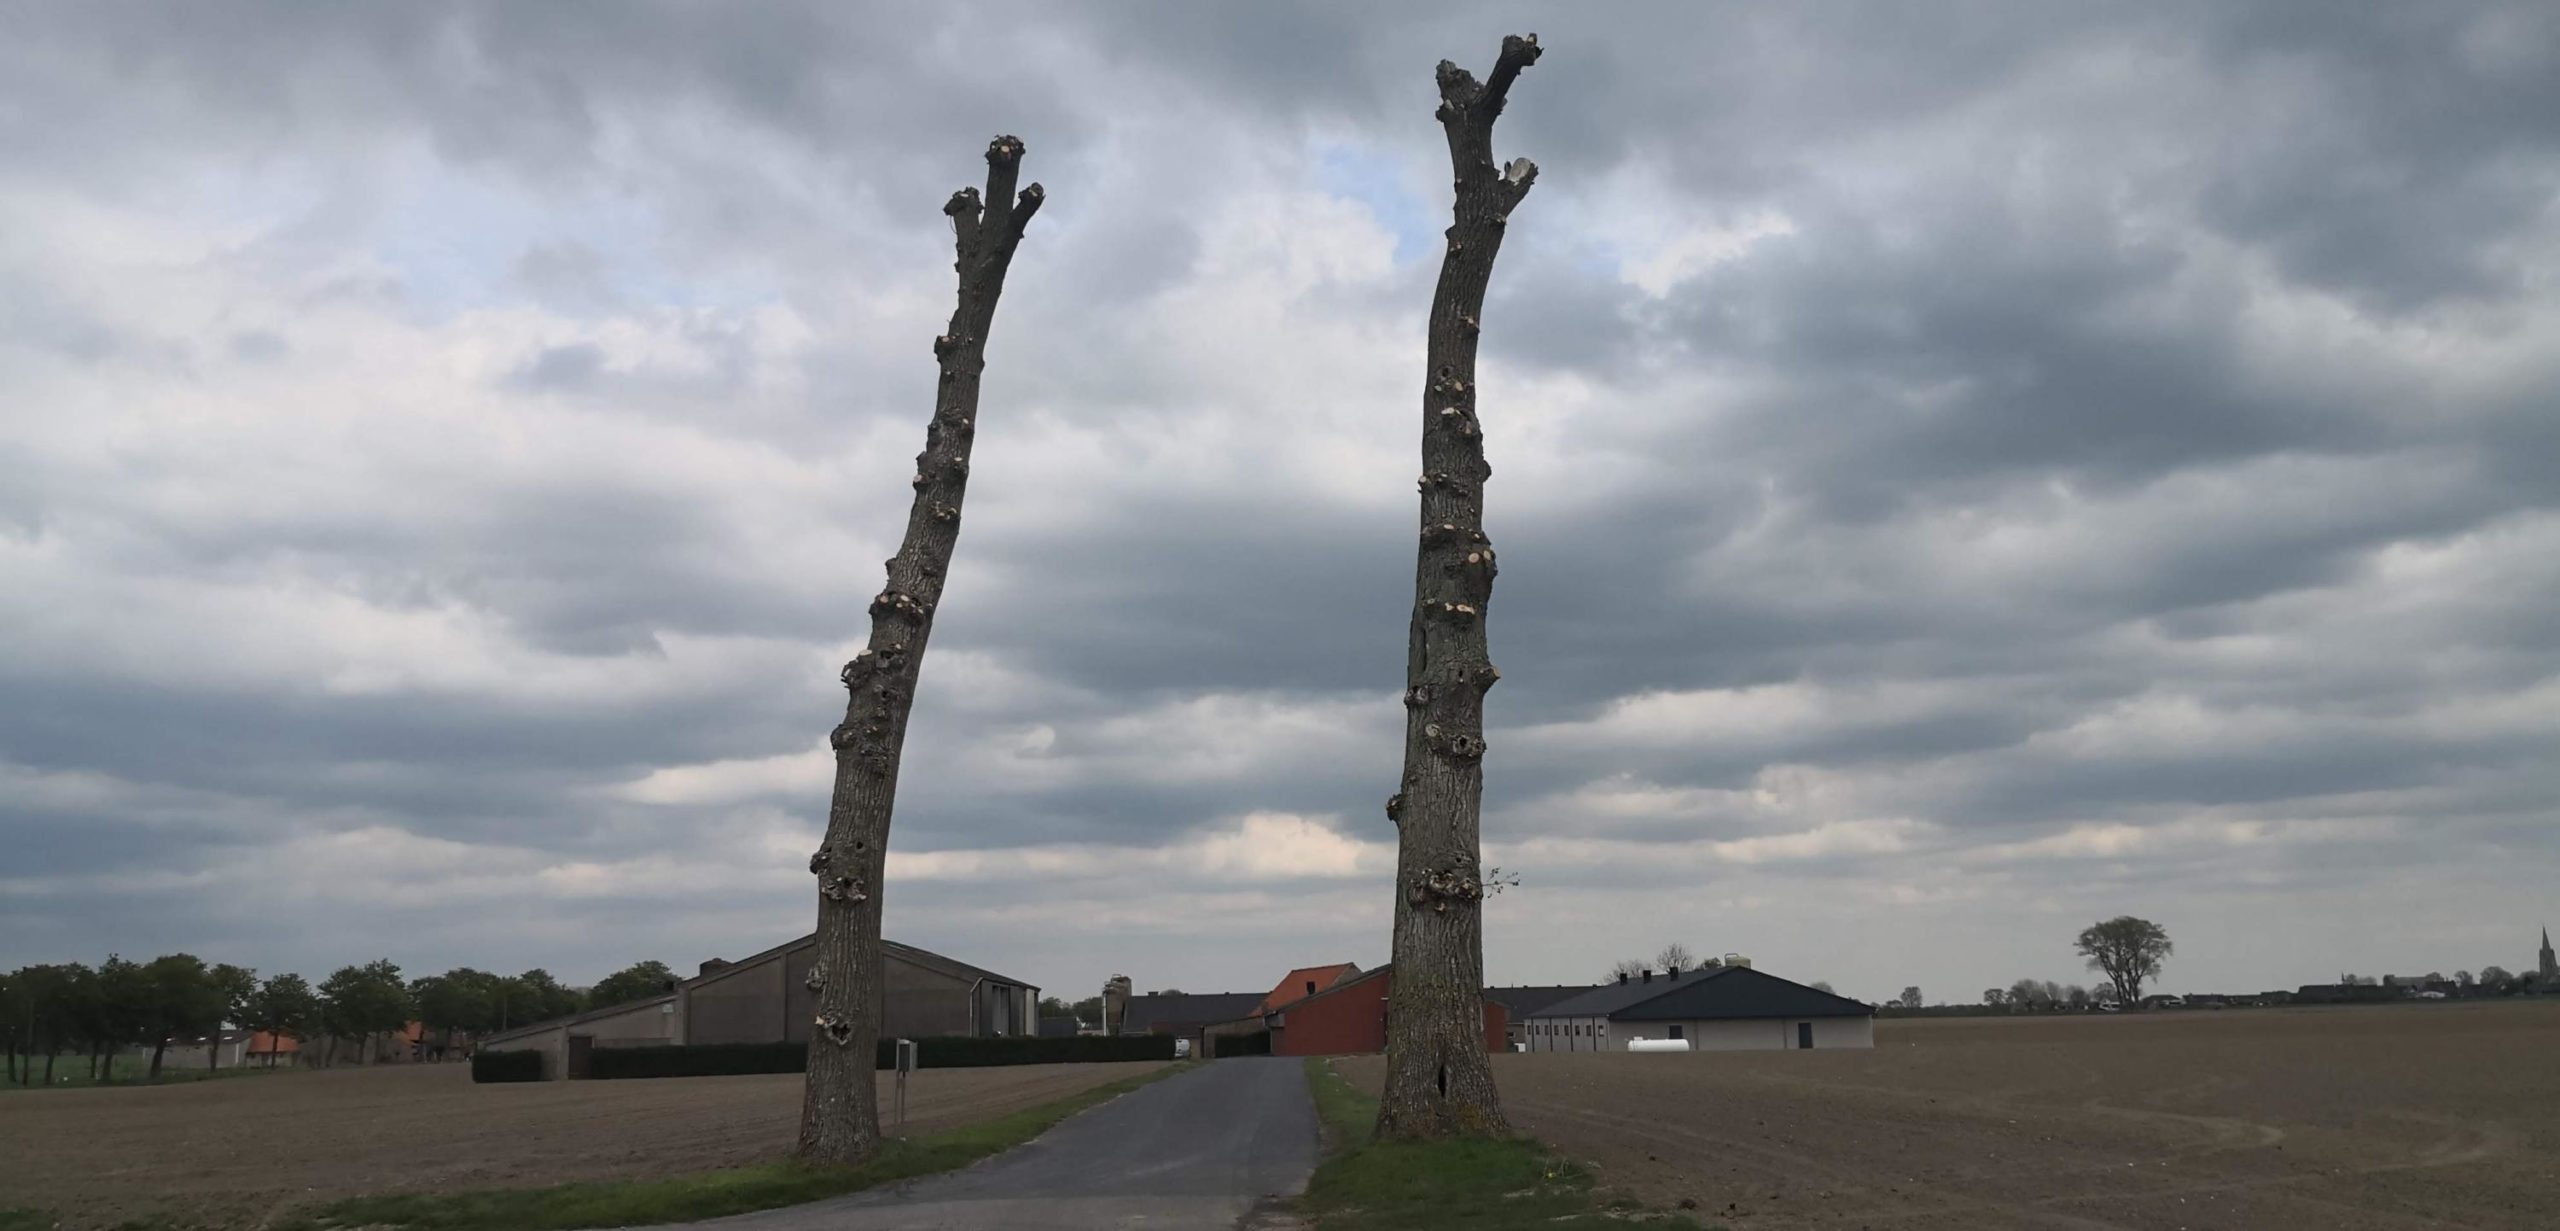 Pollinkhove arbres sinistres